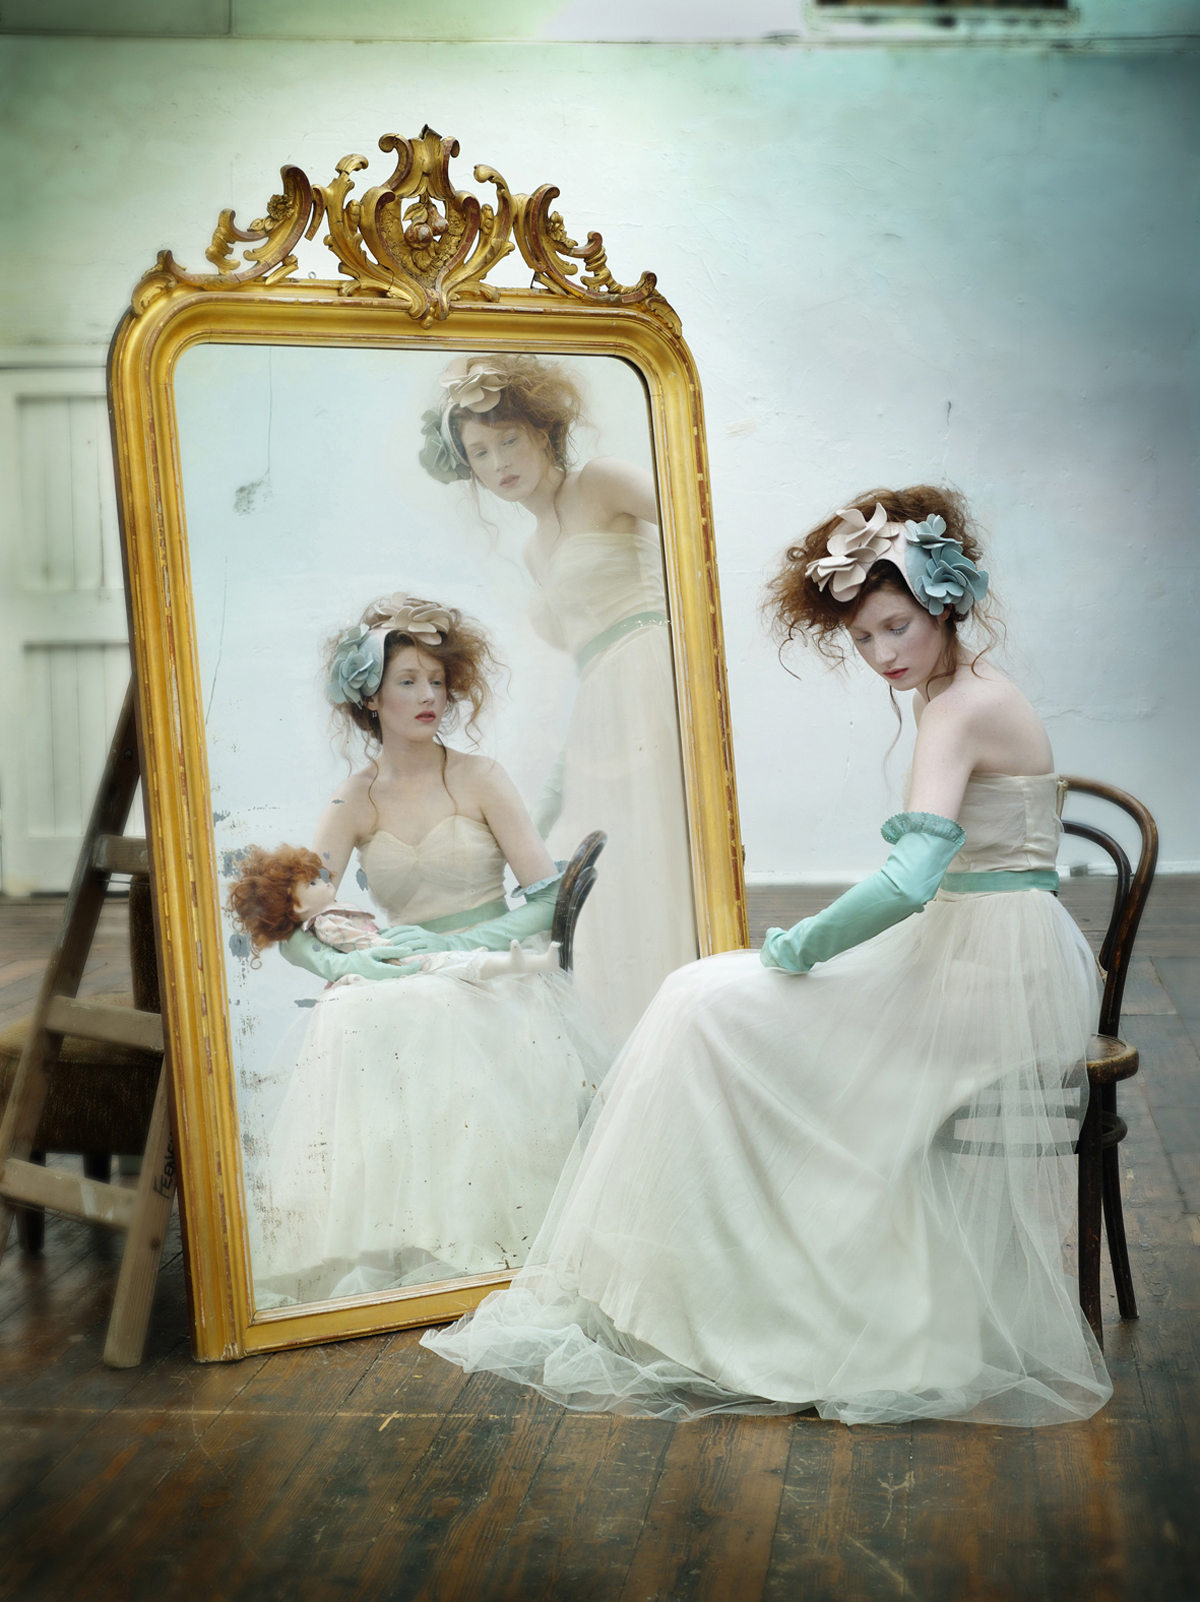 studio fashionshoot with irish model and vintage mirror